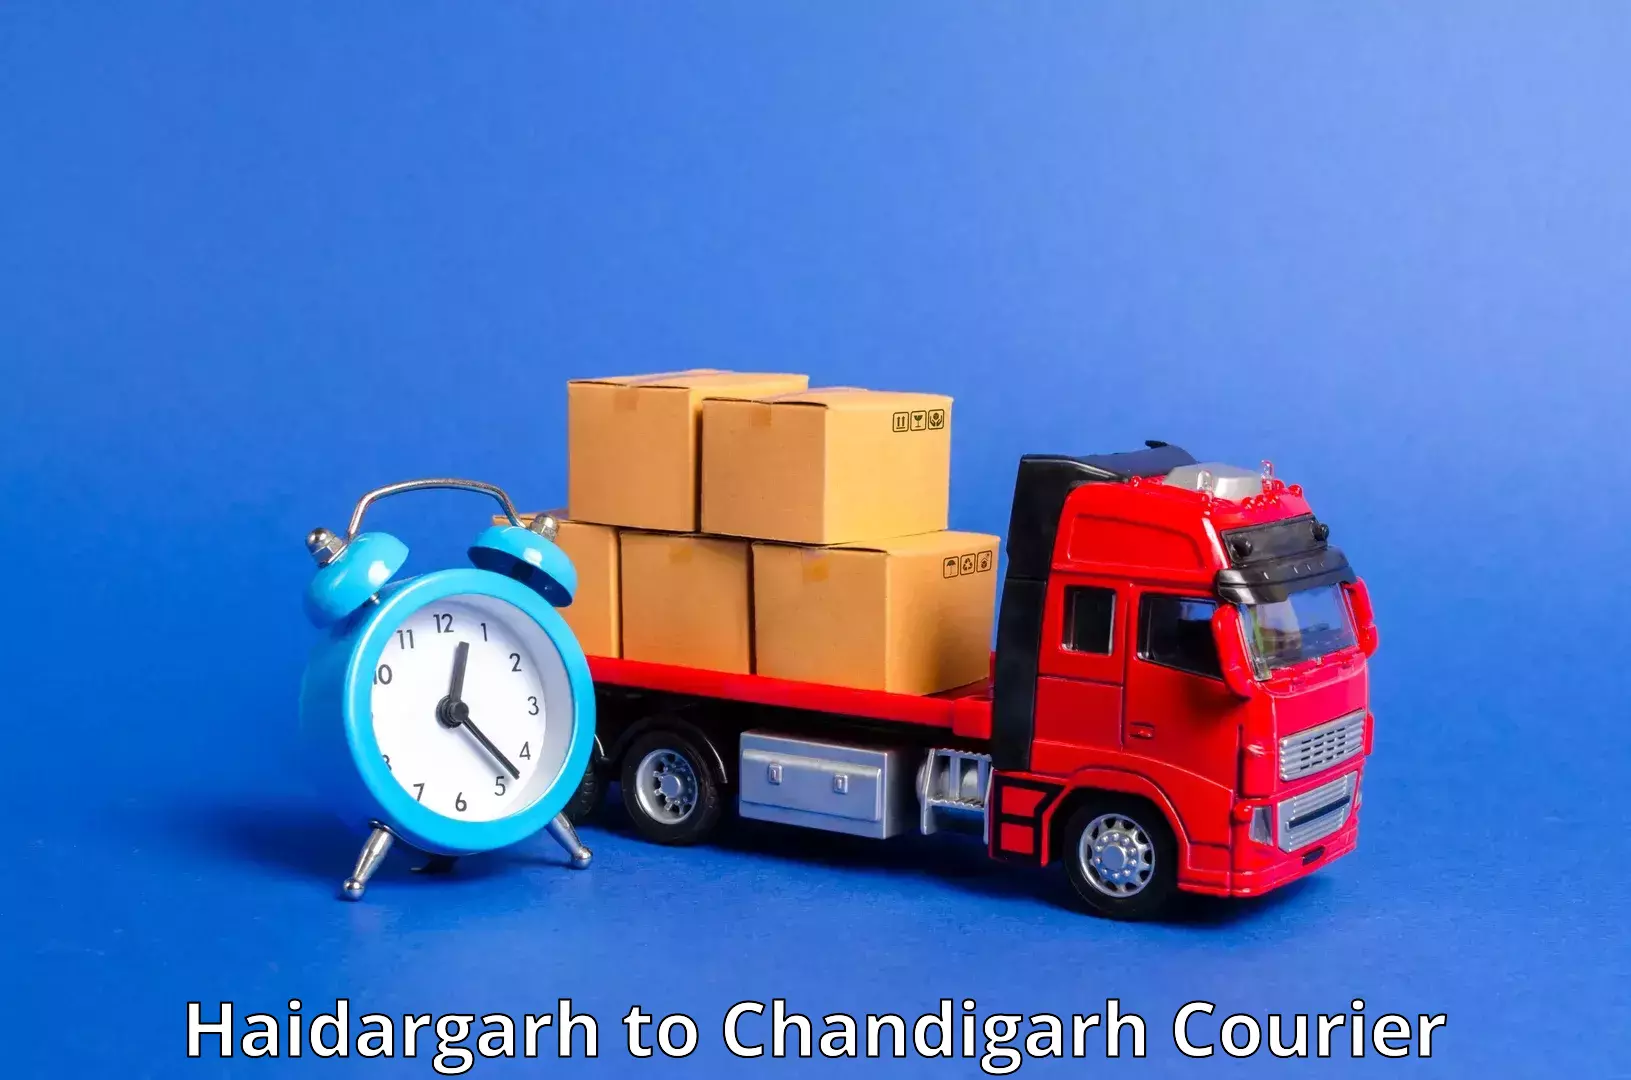 Residential courier service Haidargarh to Chandigarh